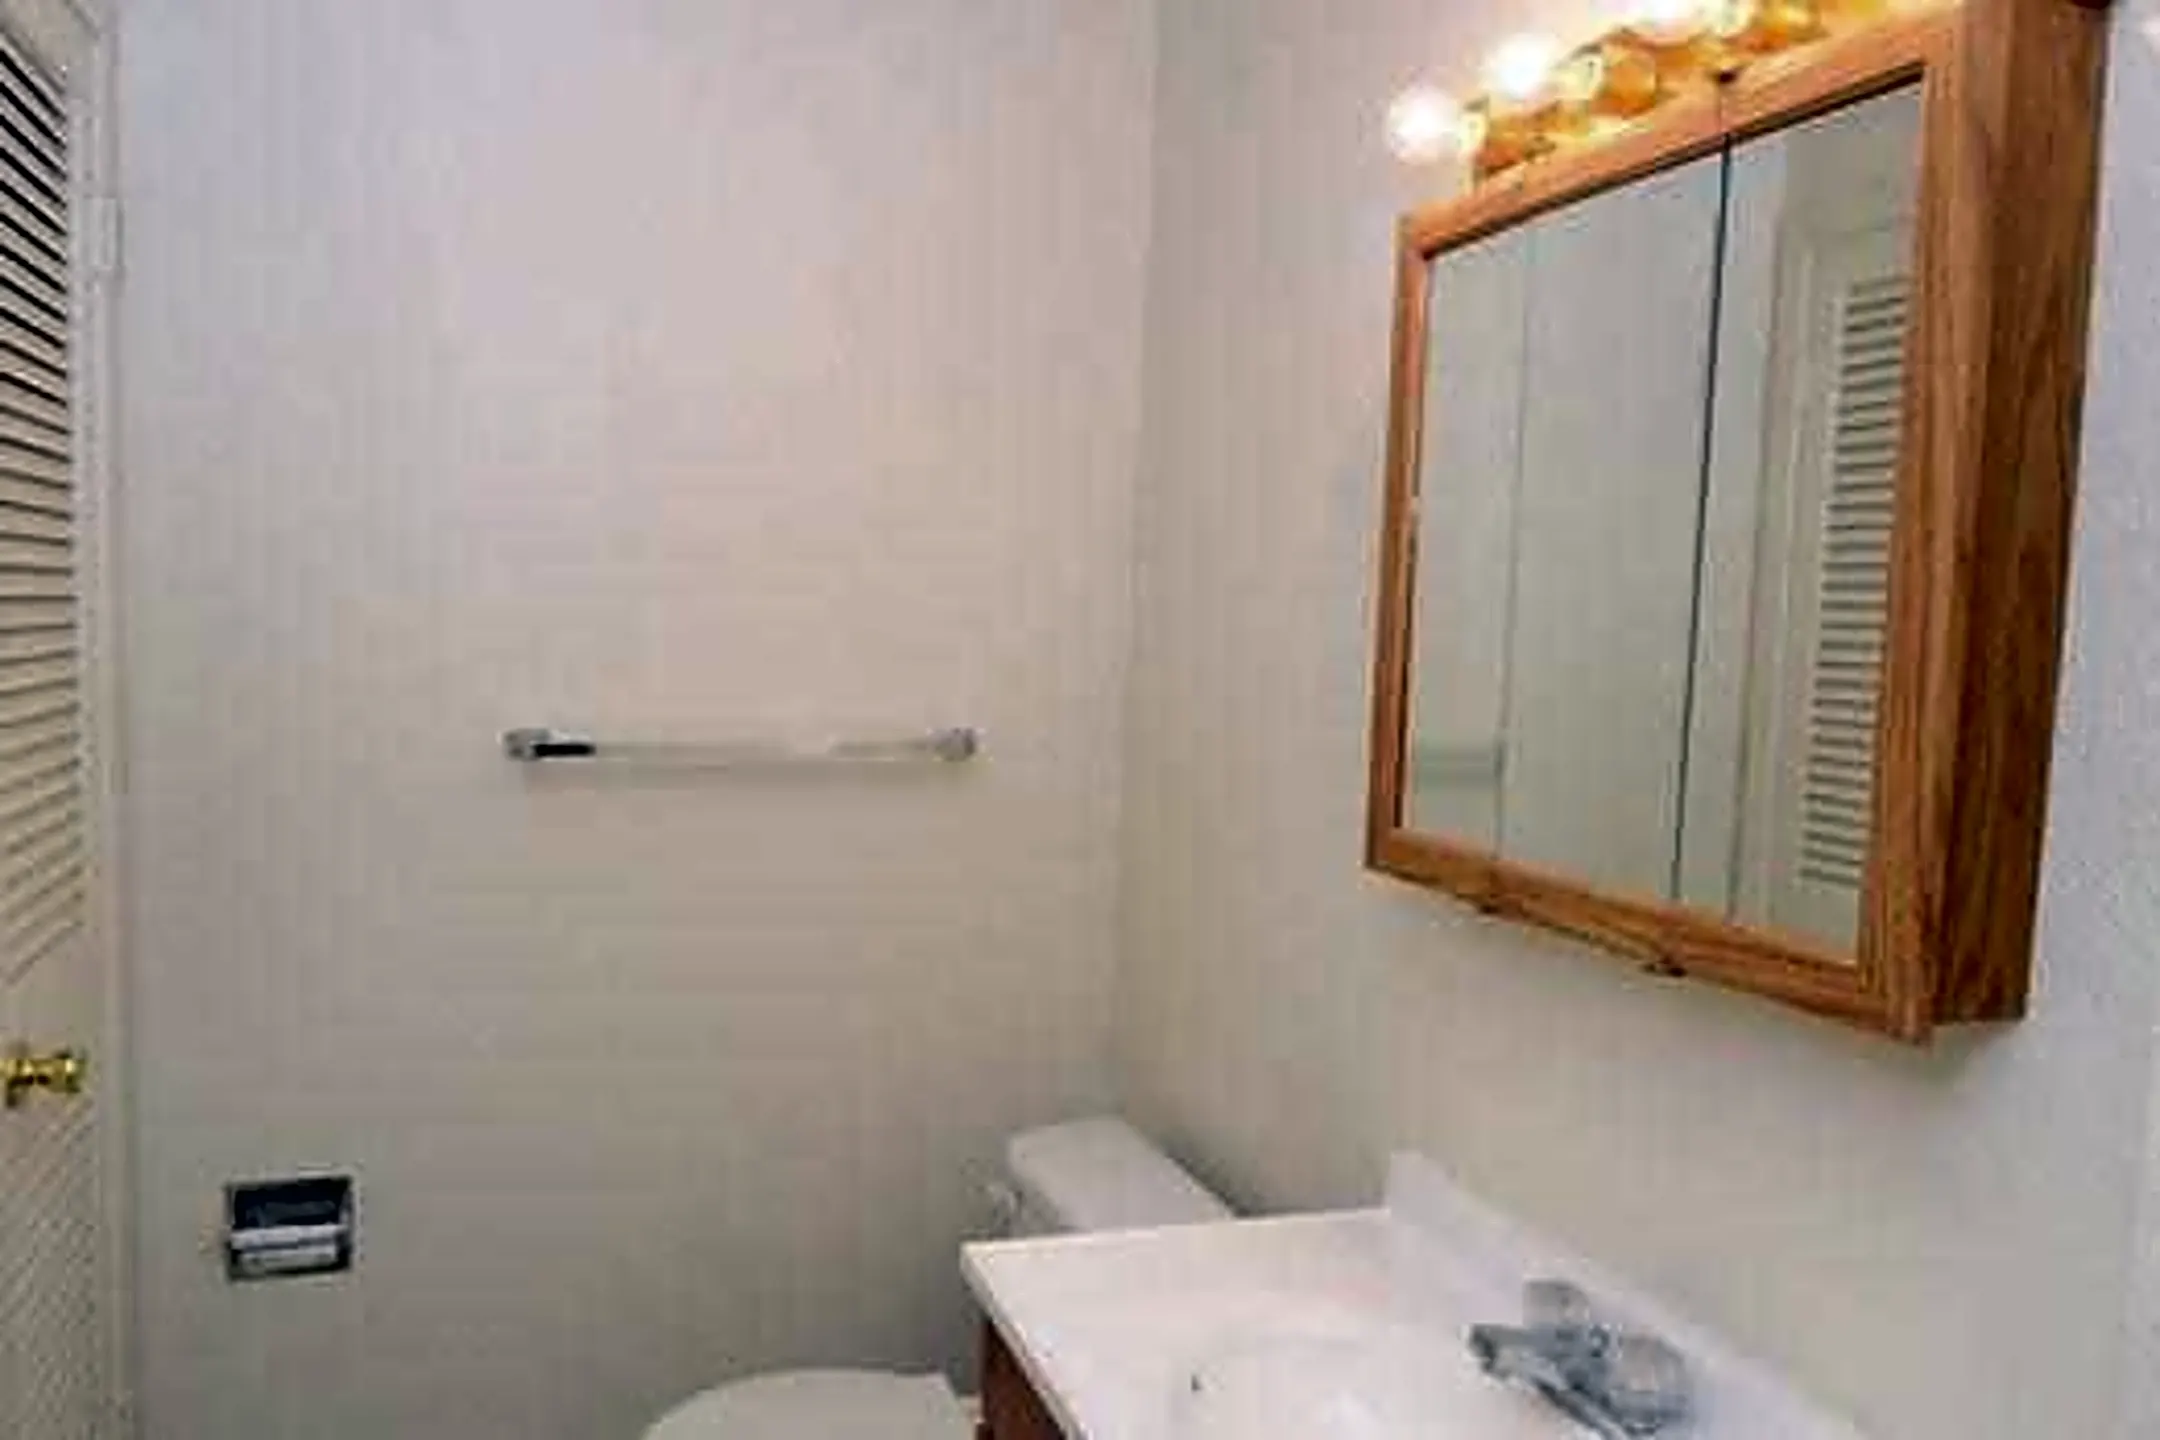 Bathroom - Sheppard's Edge Apartments - Wichita Falls, TX